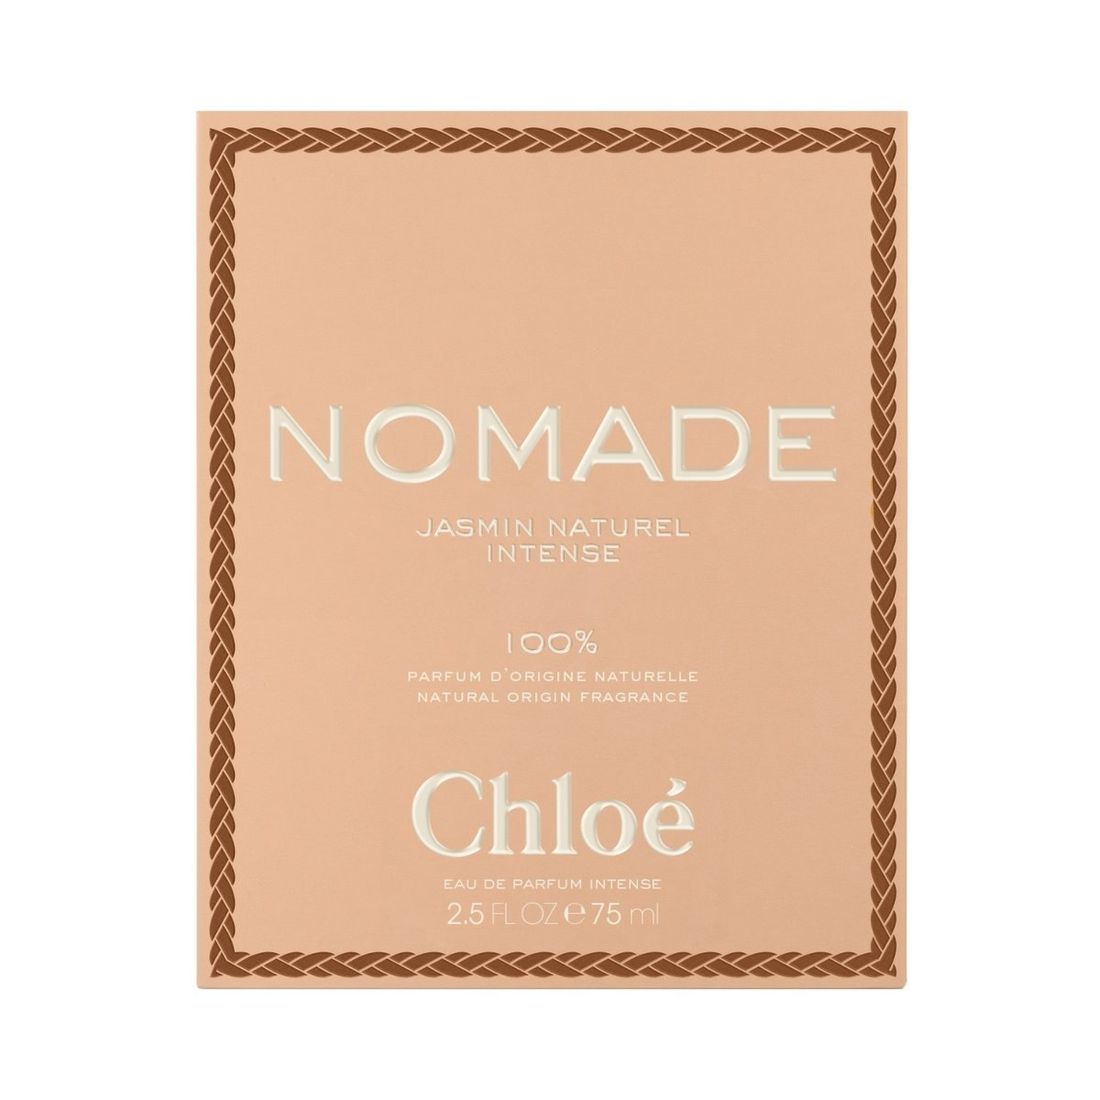 chloe nomade jasmin naturel intense